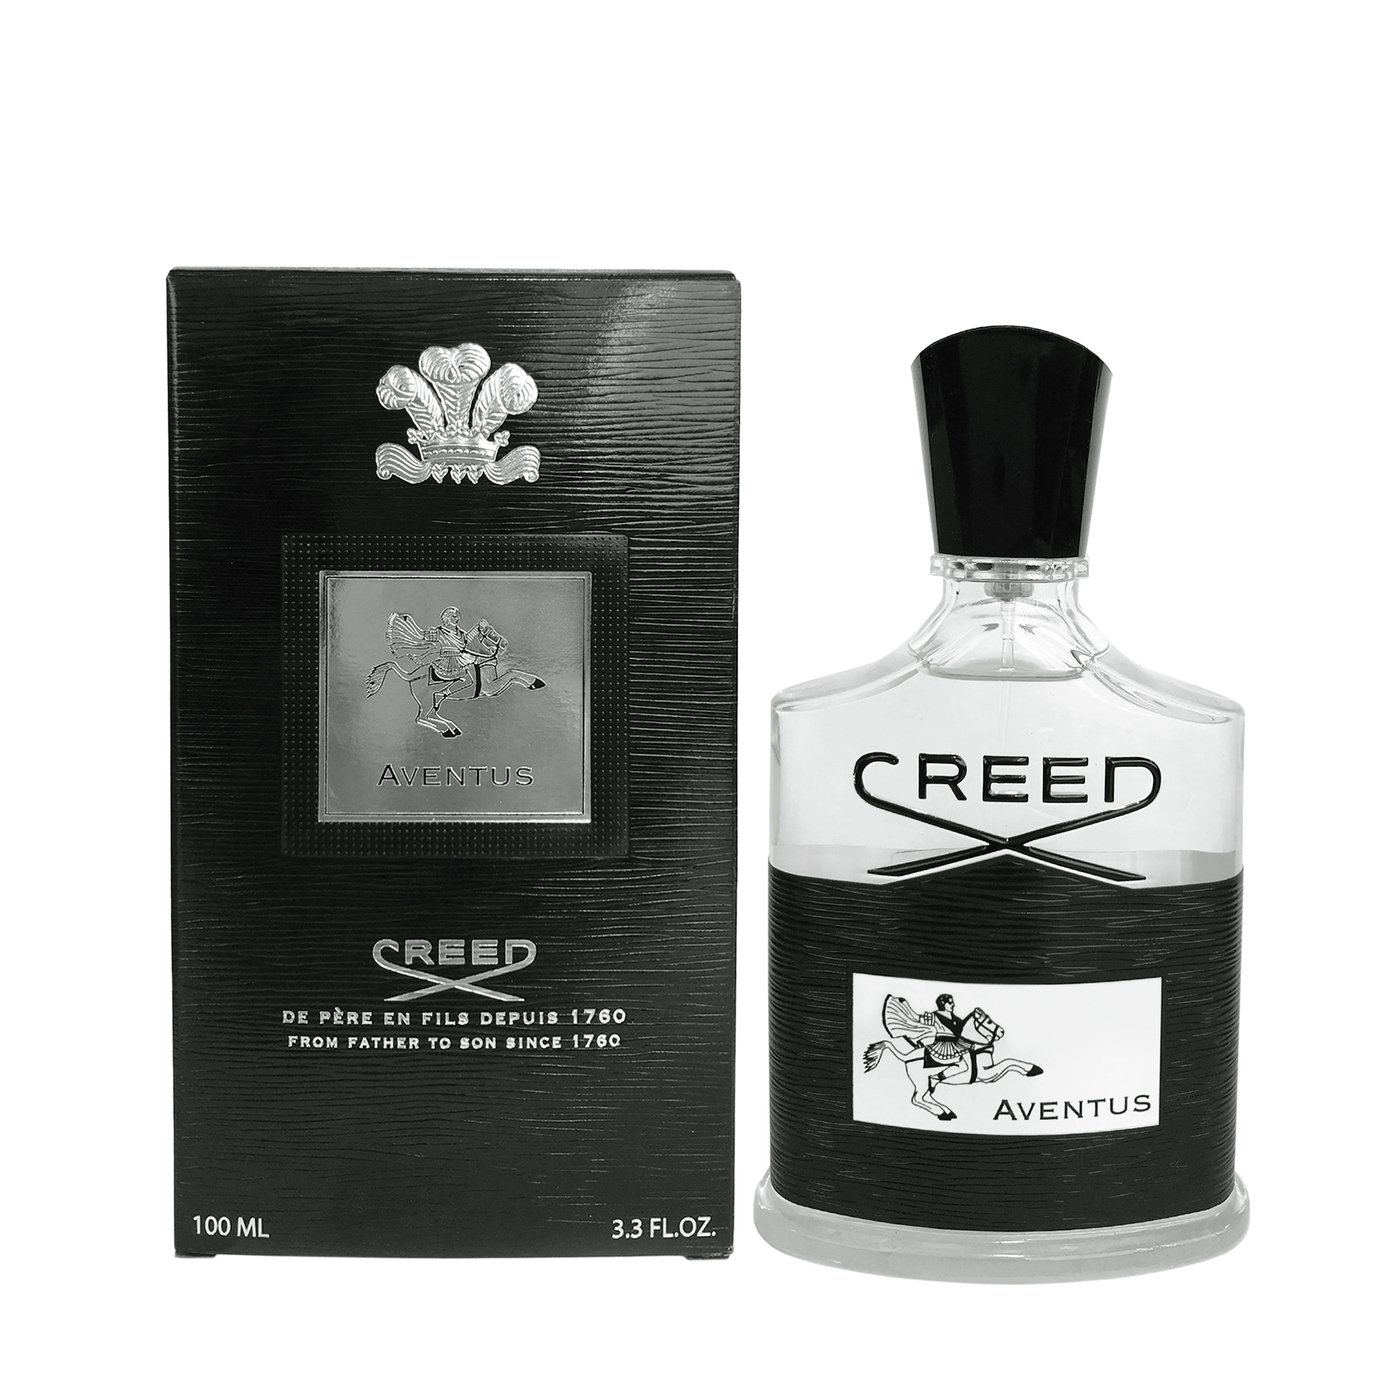 Creed Aventus Eau de Parfum Reviews - Updated July 2022